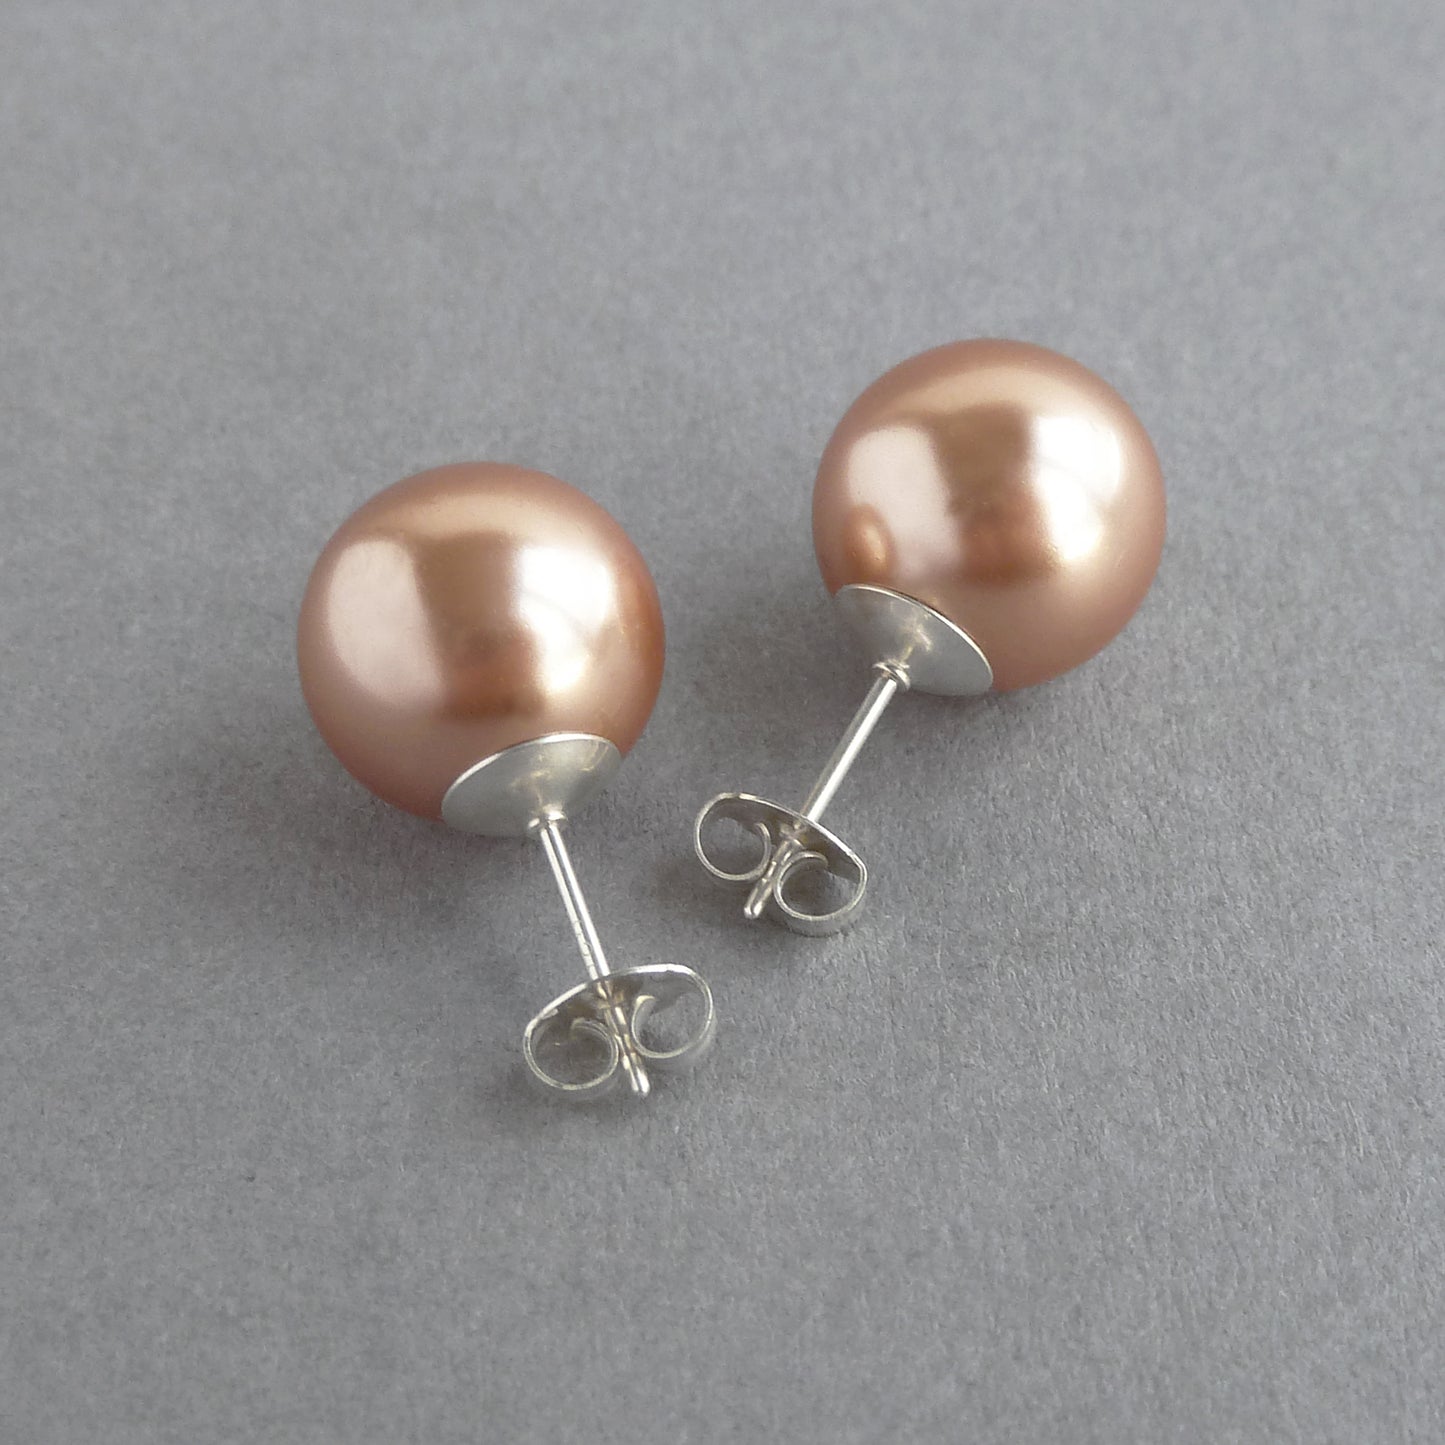 Large rose gold pearl stud earrings